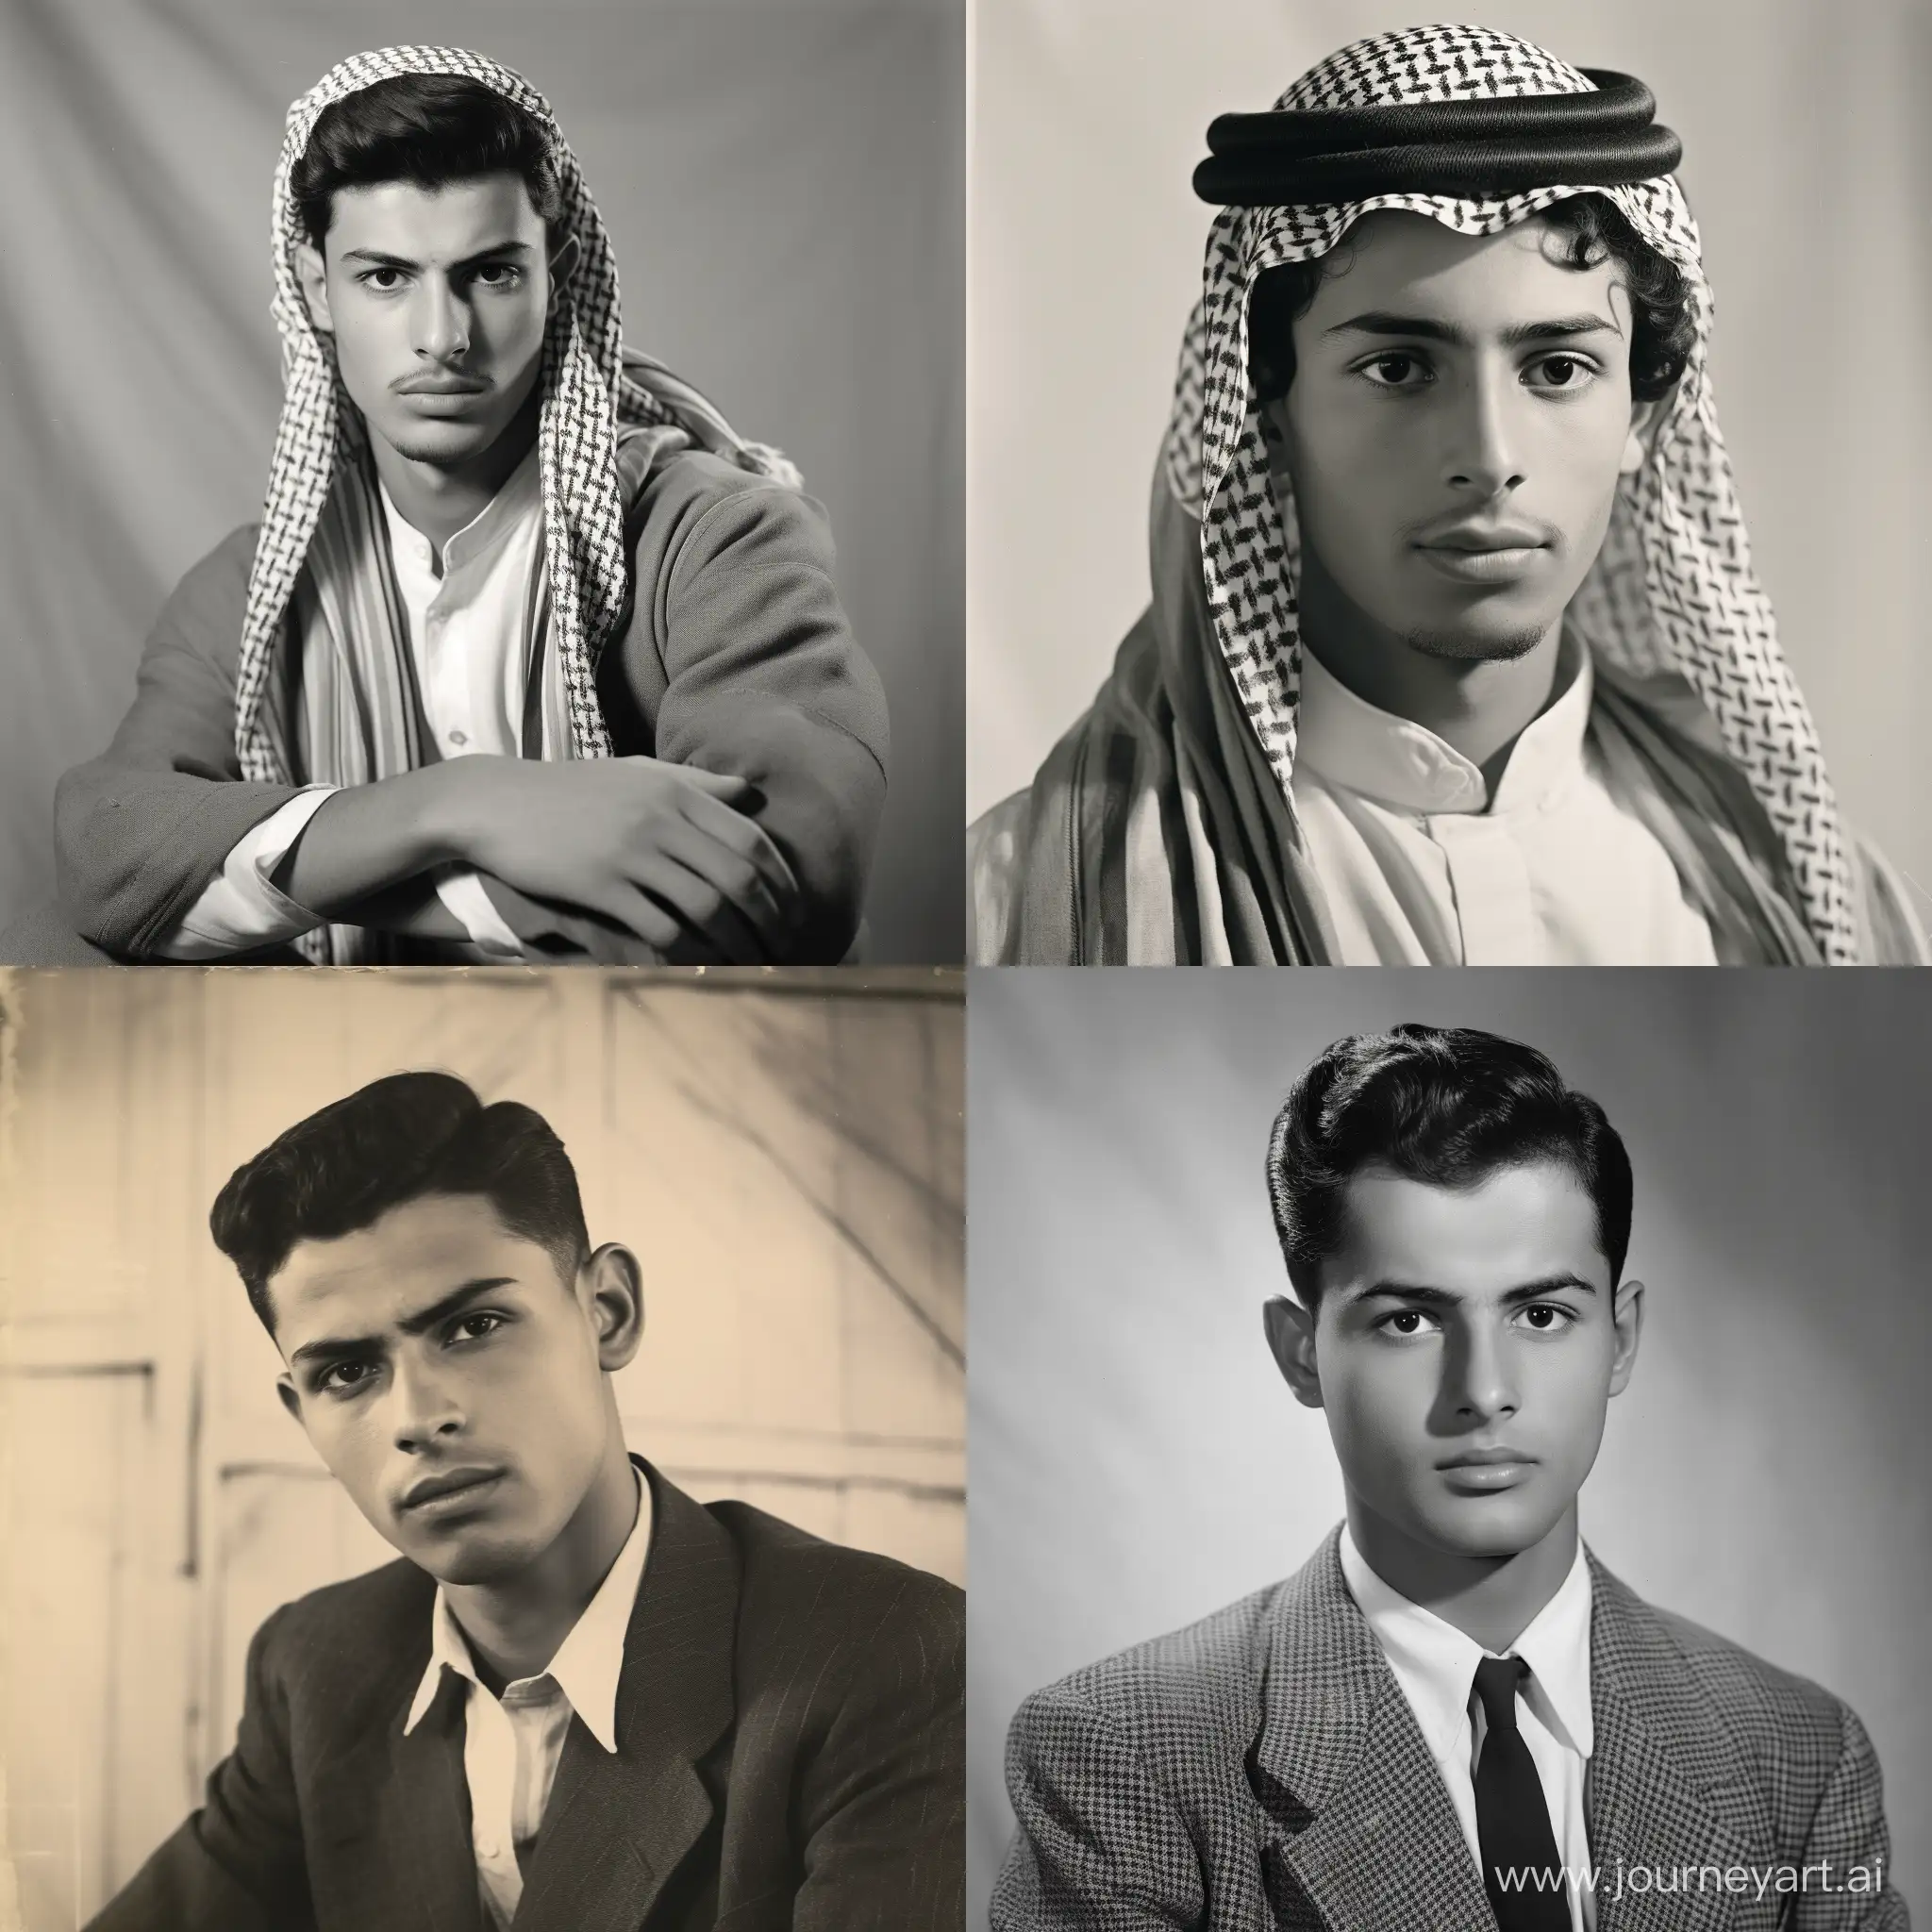 Saudi young man 1965 s: Vintage photo shows man outside. Retro black & white studio photography